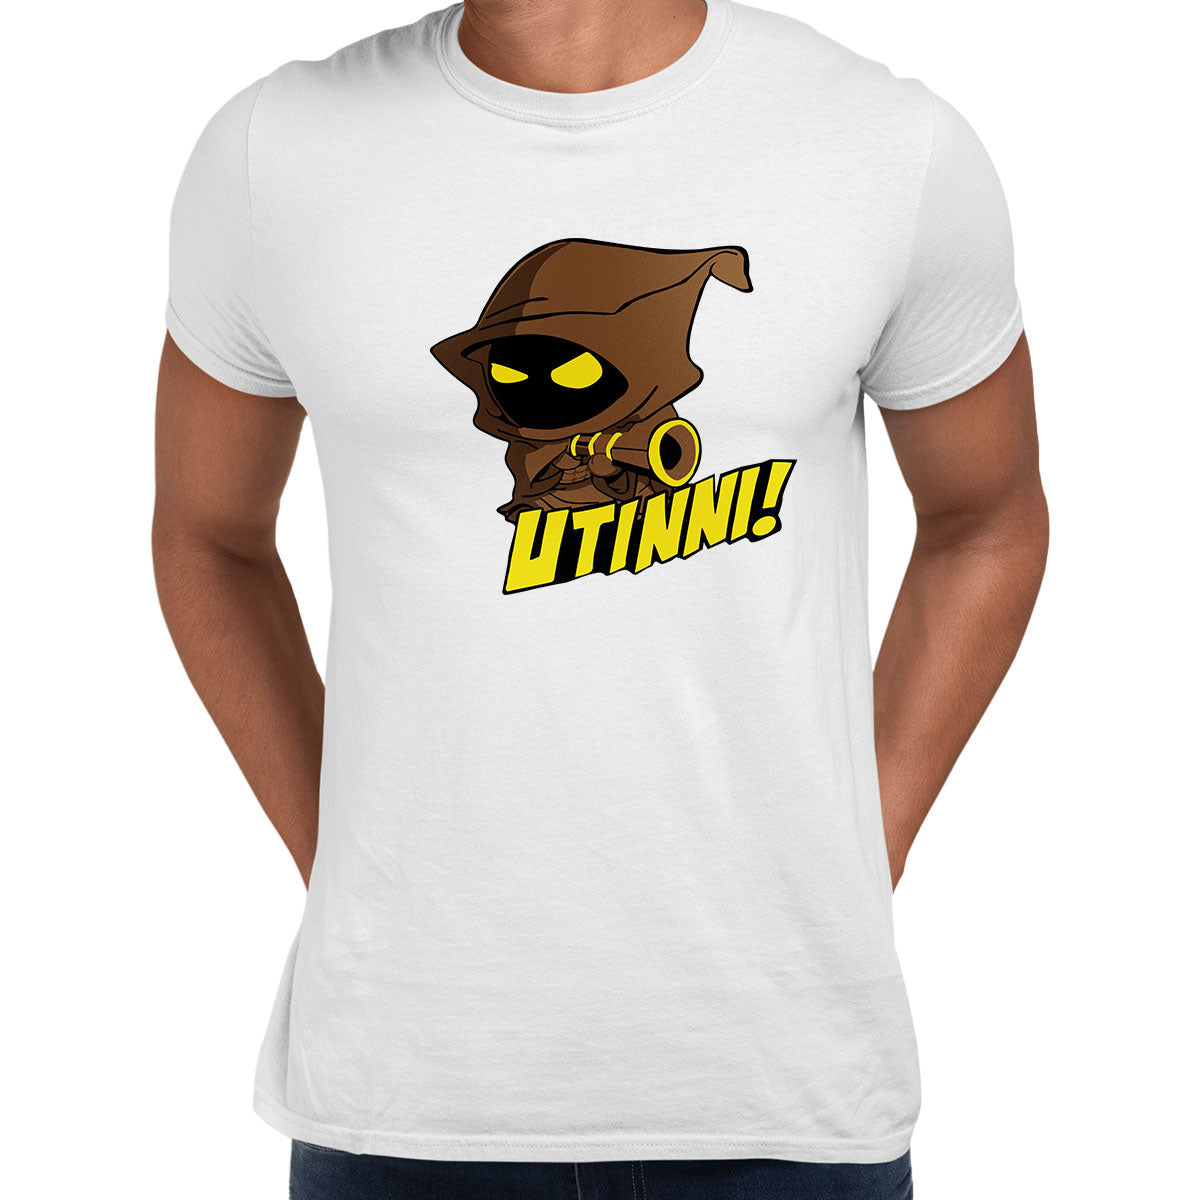 Utinni! Jawas t-shirt - Jawa Friends Momento - Tatooine Adventurer